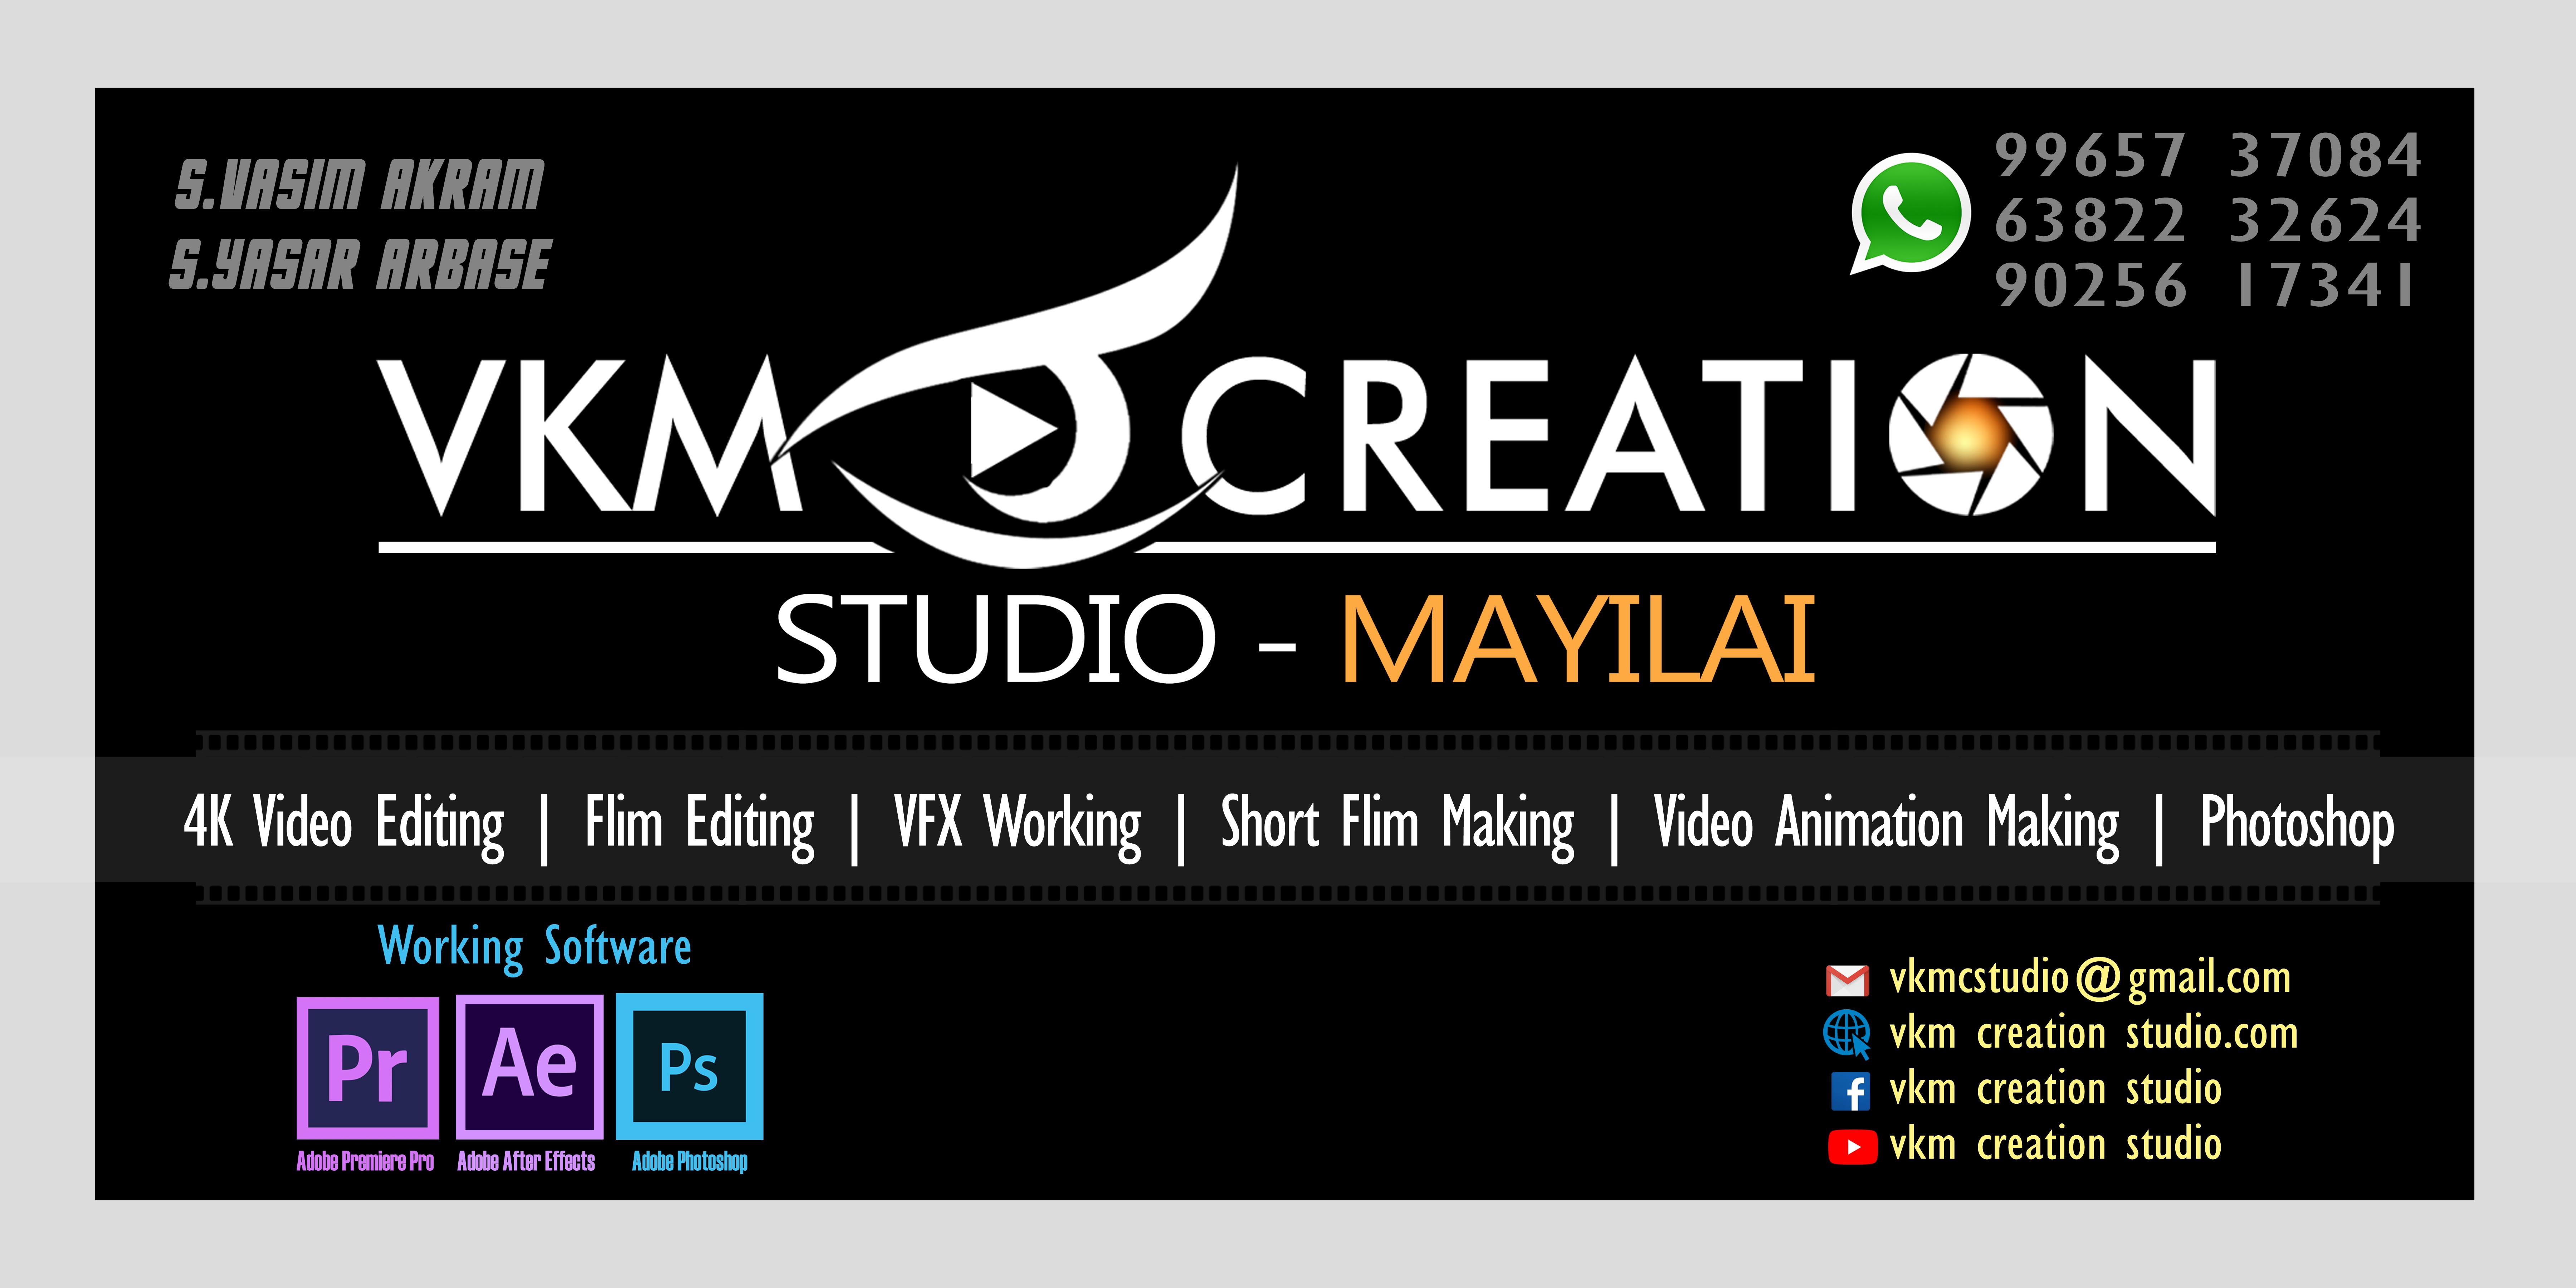 VKM Creation Studio